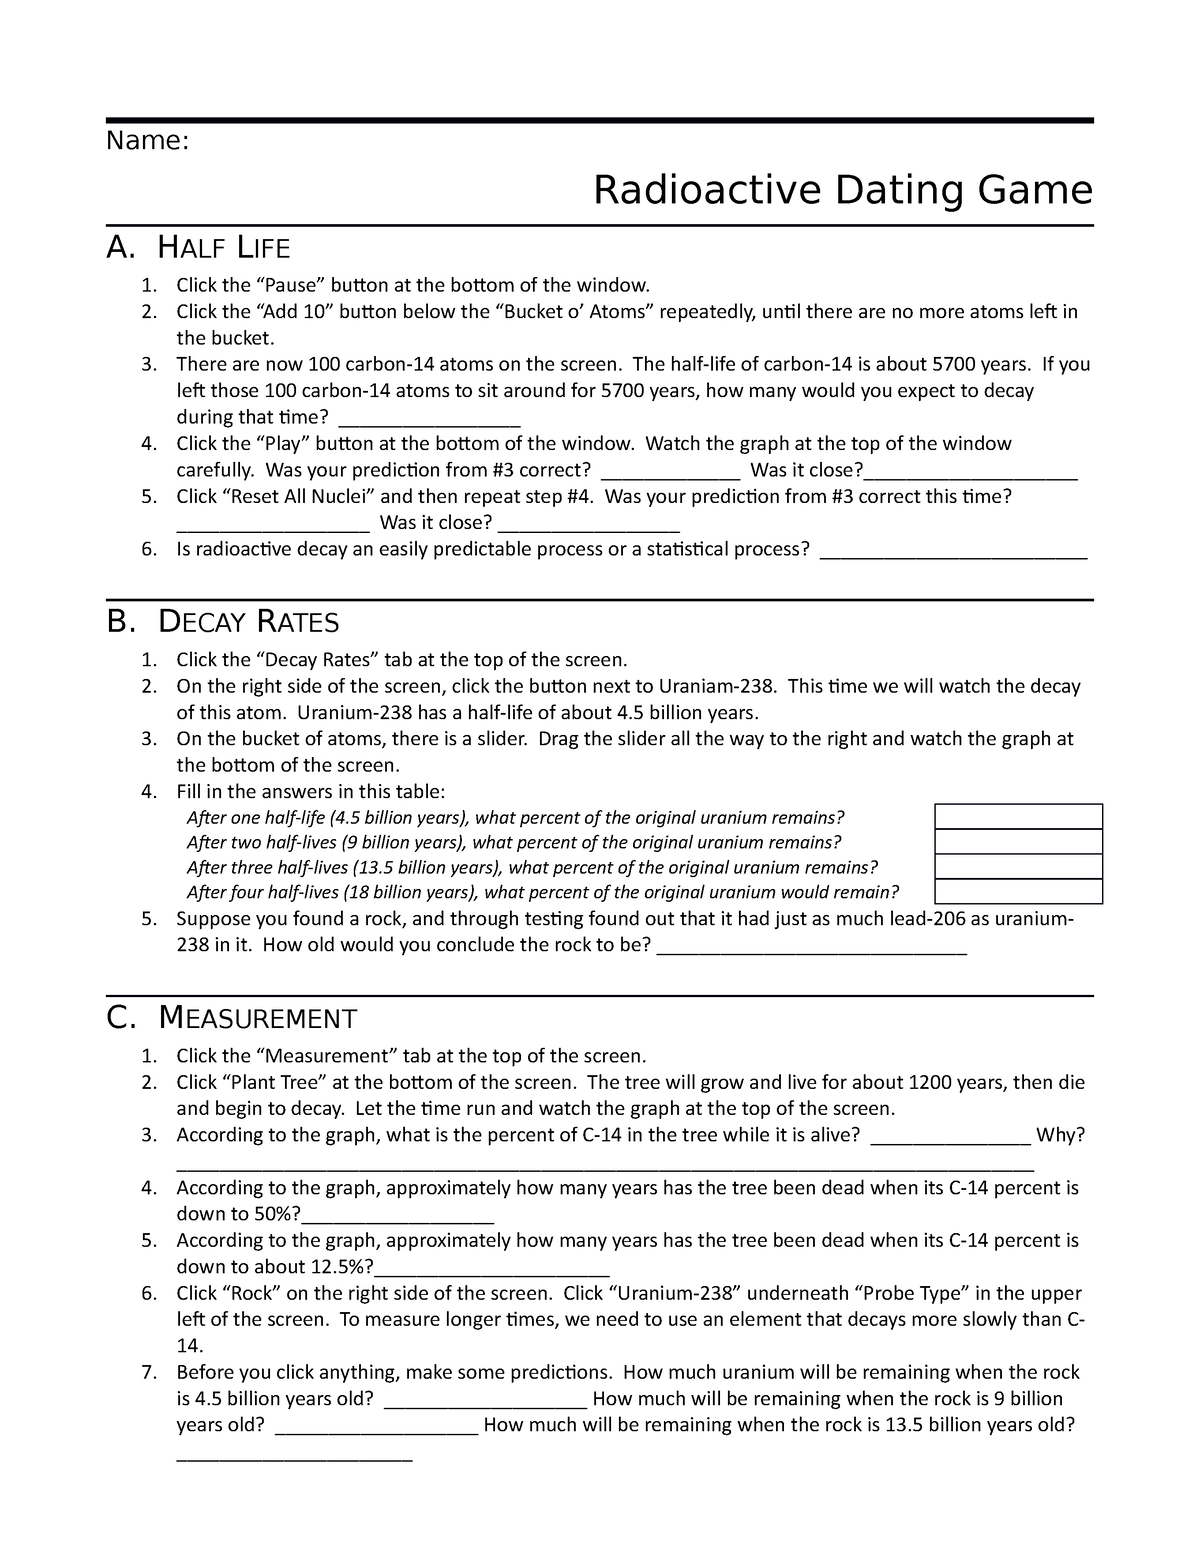 Radioactive dating game